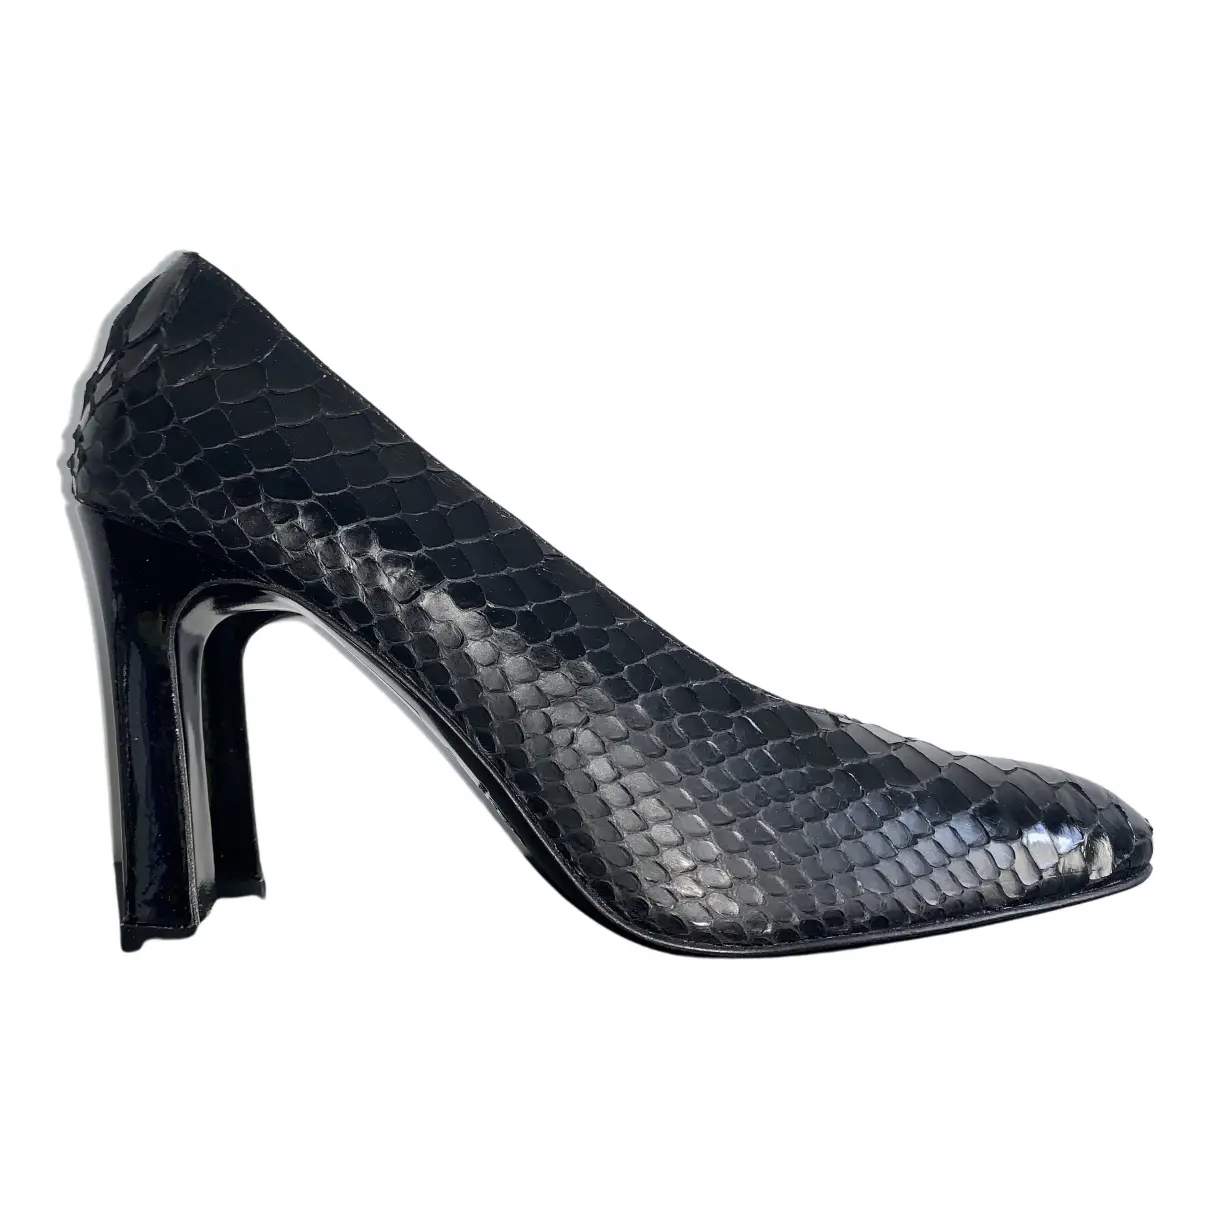 Leather heels Paule Ka